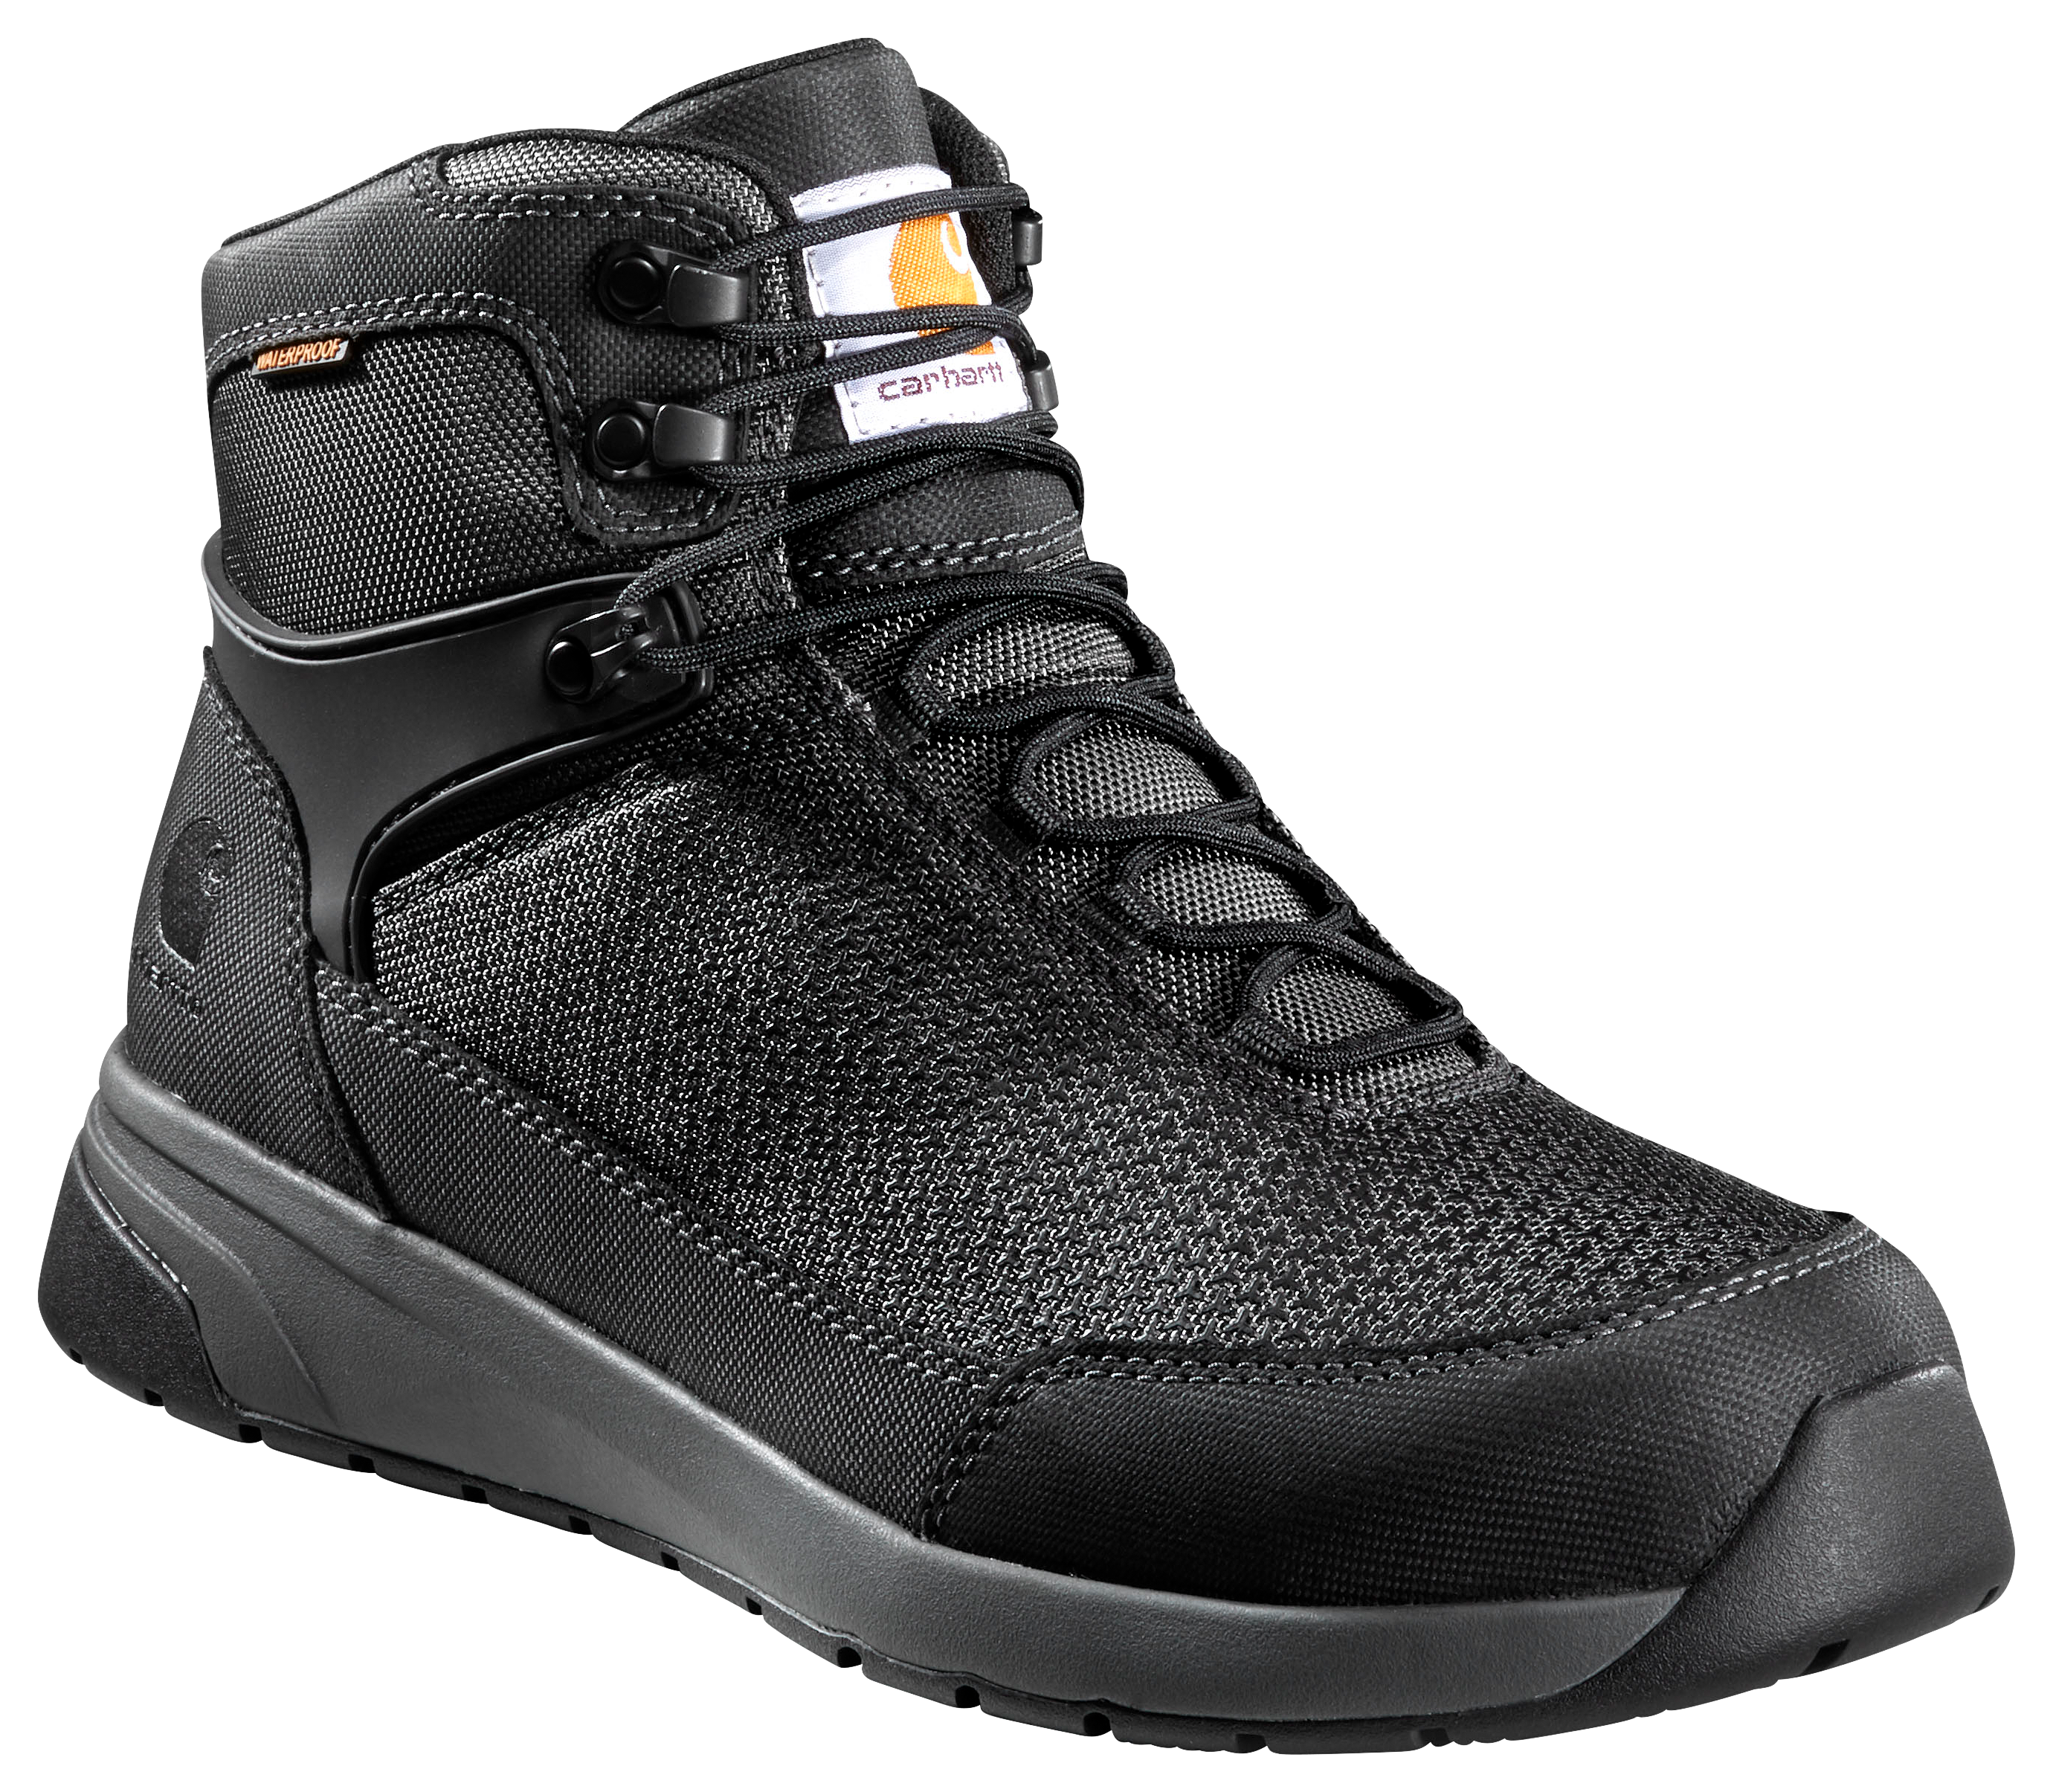 Carhartt Force 6"" Nano Composite-Toe Work Boots for Men - Black - 11.5W